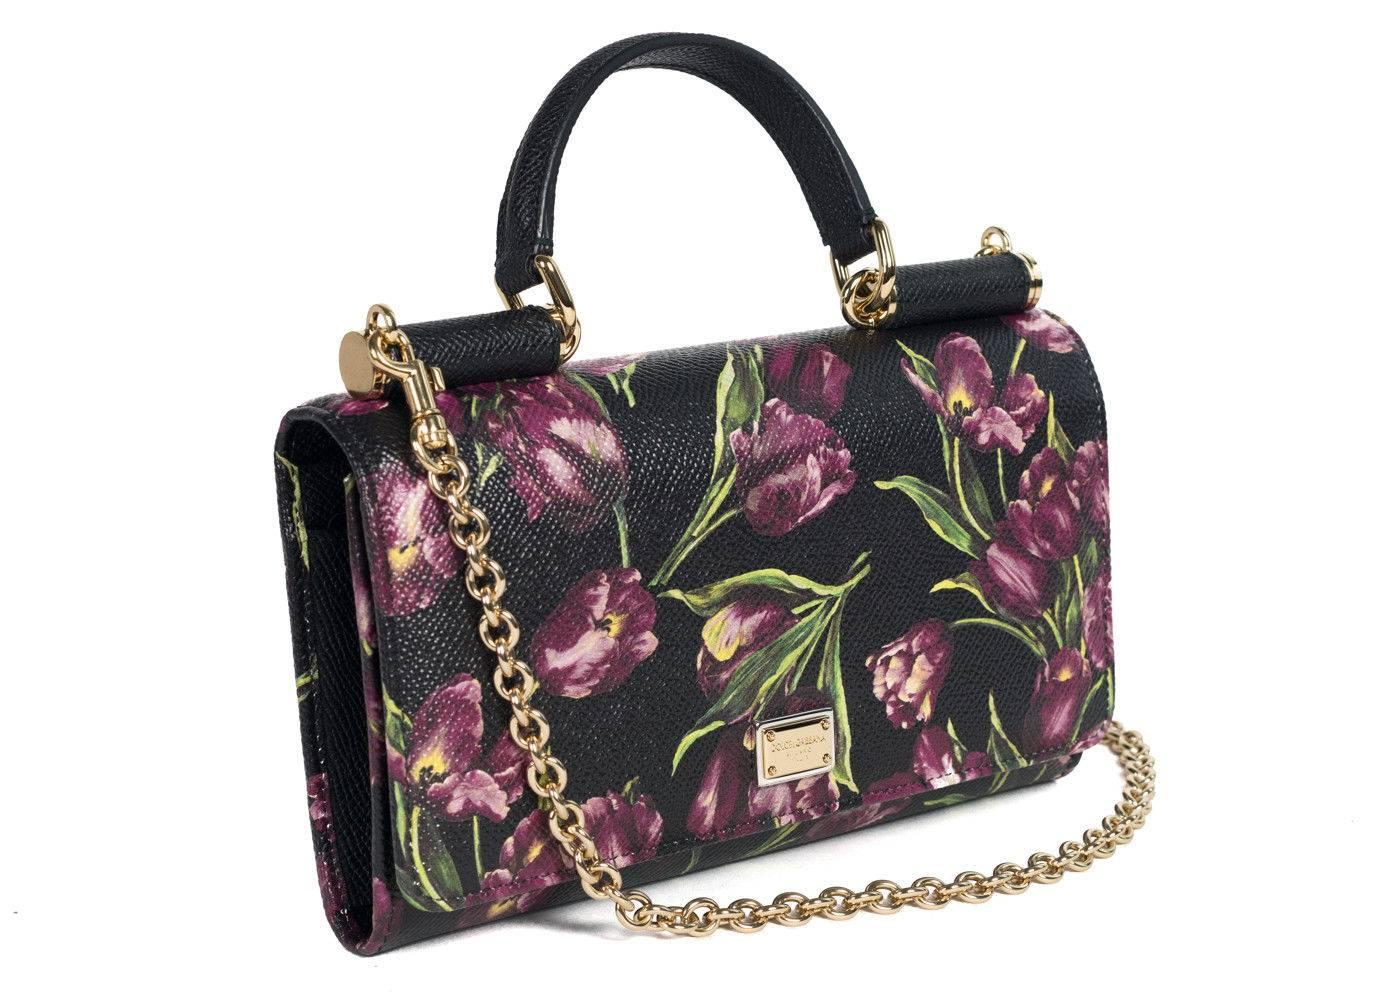 Brand New Dolce&Gabbana Shoulder Bag
Original Tags & Dust Bag Included
Retails in Stores & Online for $1095
Dimensions: 7"L x 4"H x 1.5"D

Dolce & Gabbana's Von wallet shoulder bag in a purple floral printed pattern.